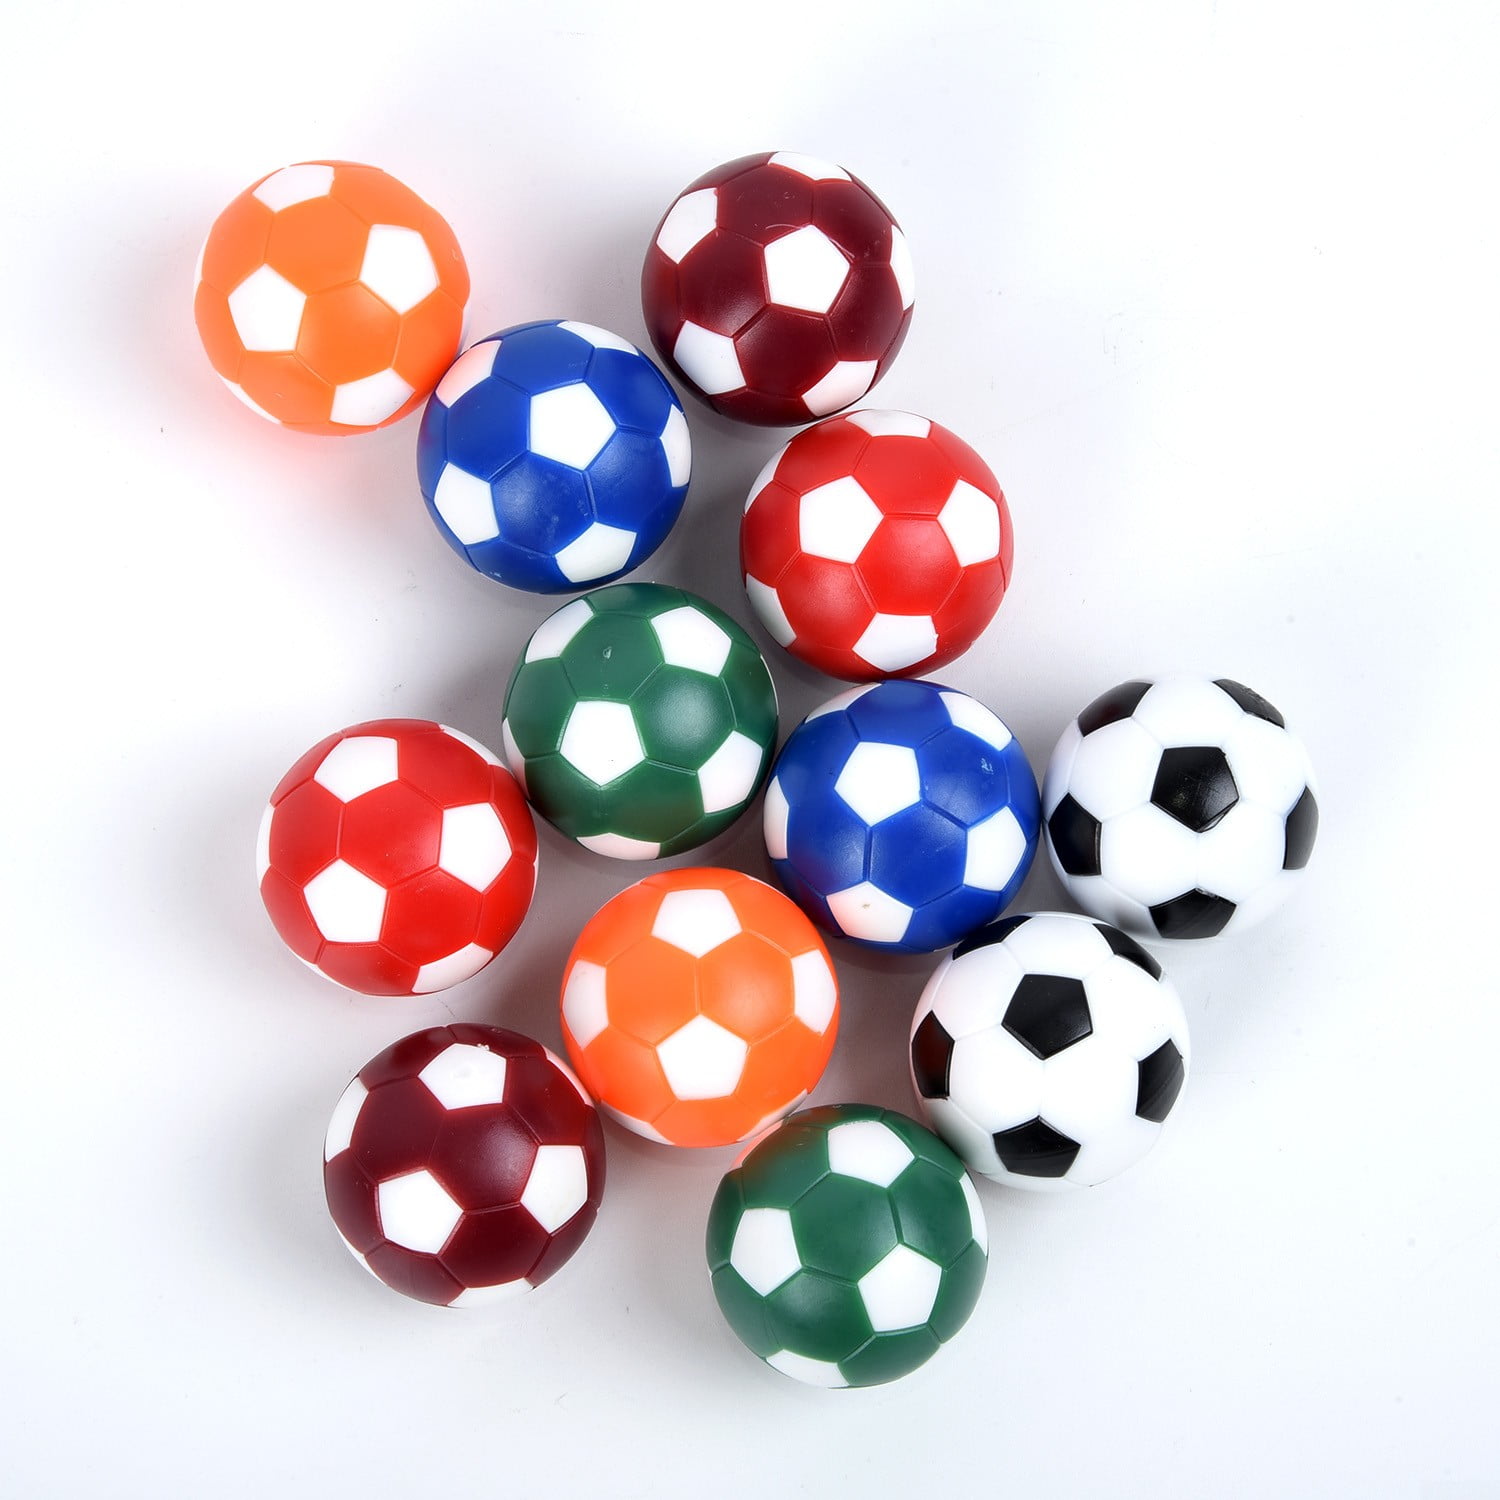 12PCS Foosball Table Football Soccer Ball For Entertainment Indoor Game Kit 